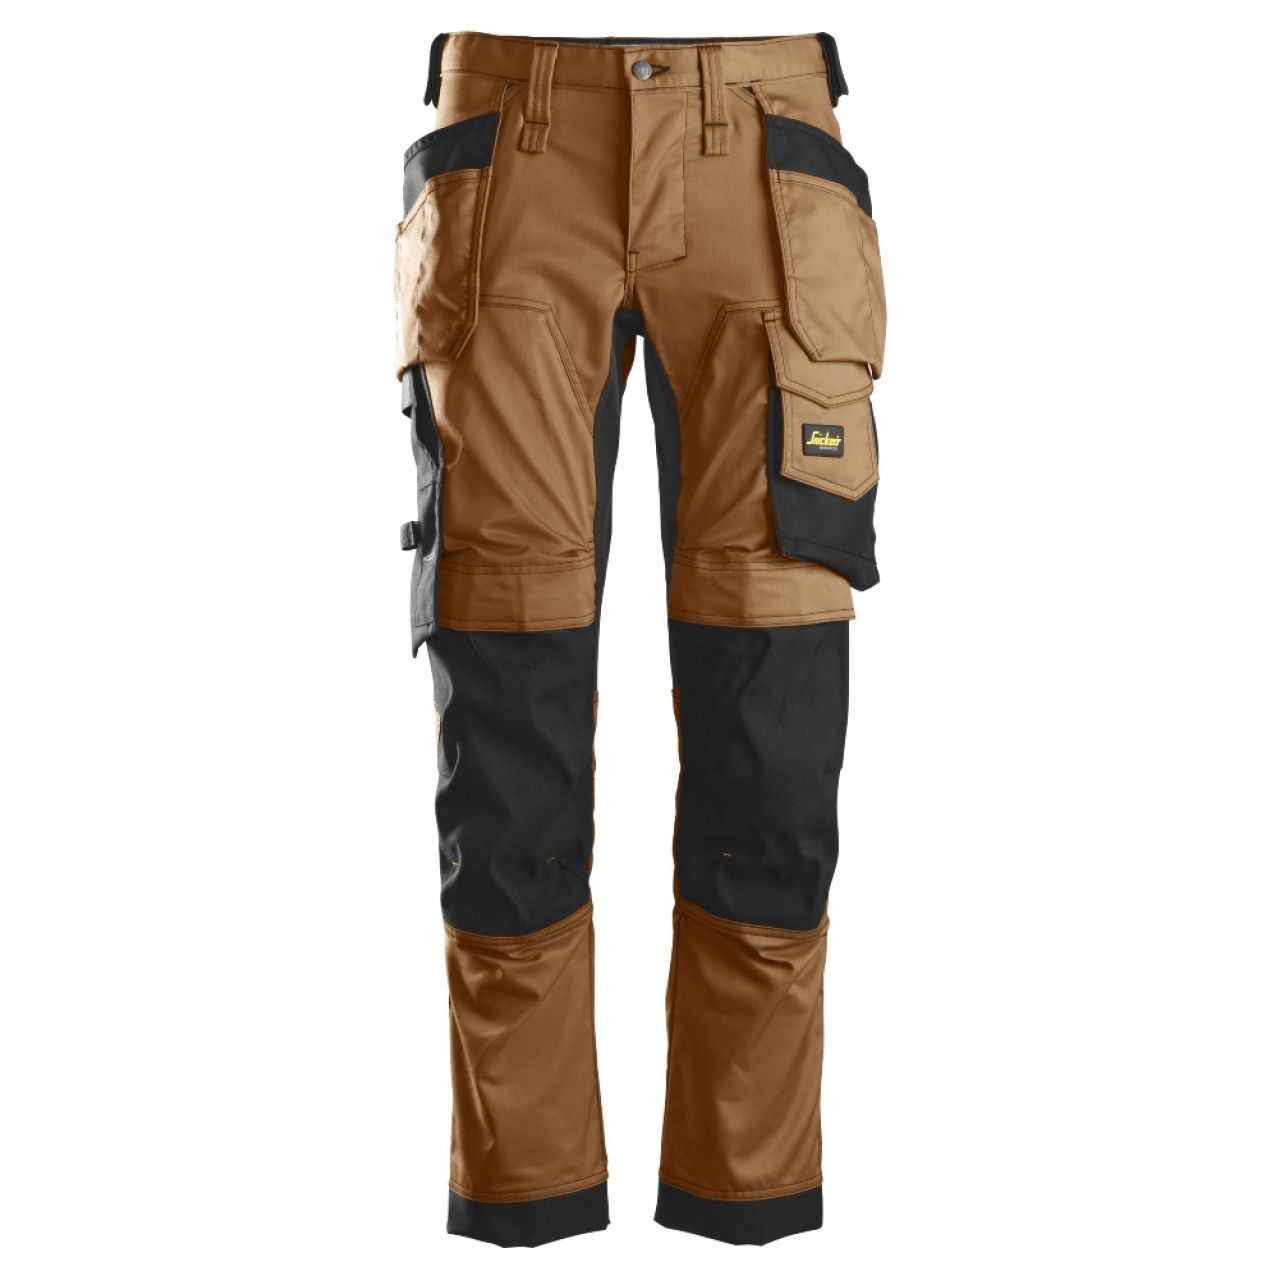 6241 Pantalones largos de trabajo elásticos con bolsillos flotantes AllroundWork marron-negro talla 56